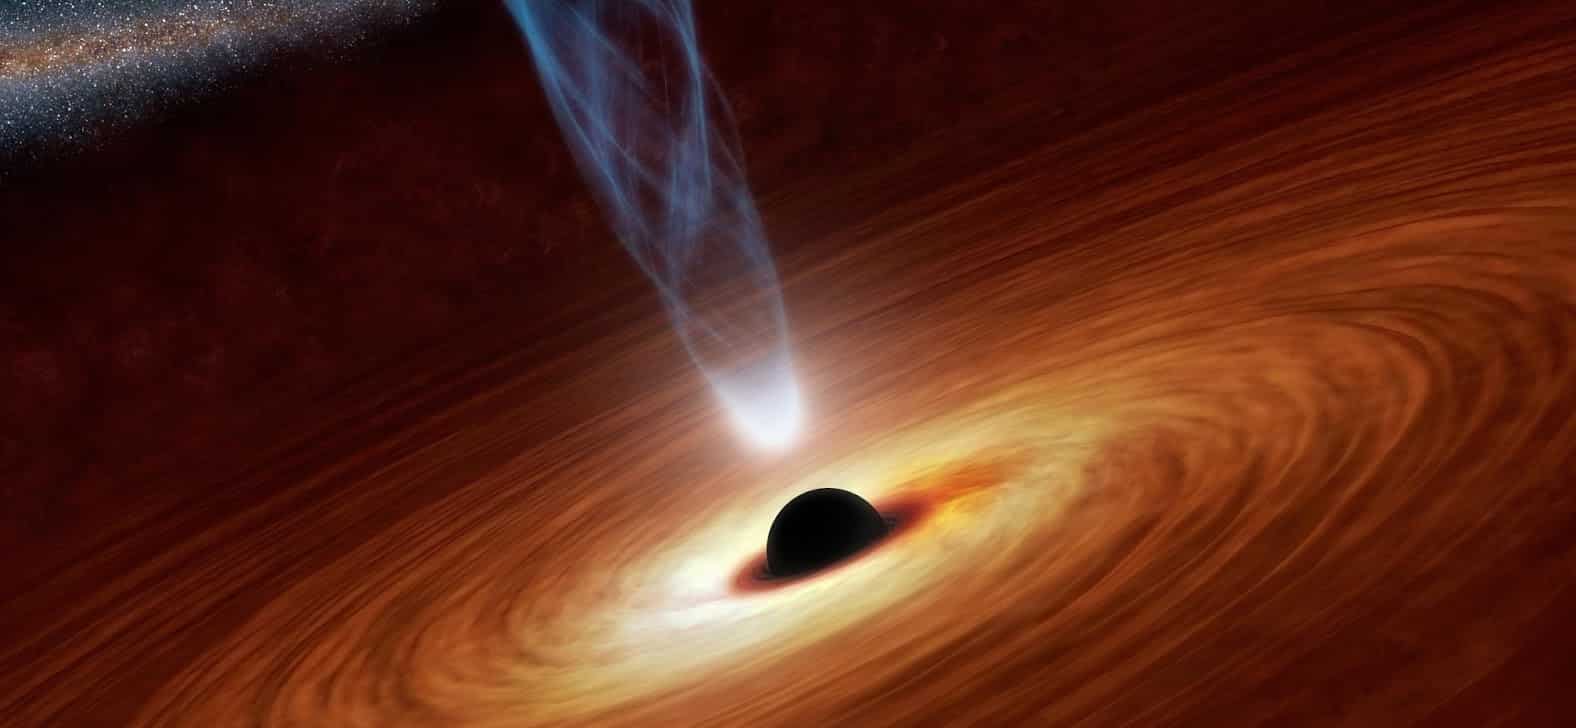 PIA16695 BlackHole Corona 20130227 e1460711986448 ماذا يوجد في بؤرة الثقب الأسود؟ مجلة نقطة العلمية